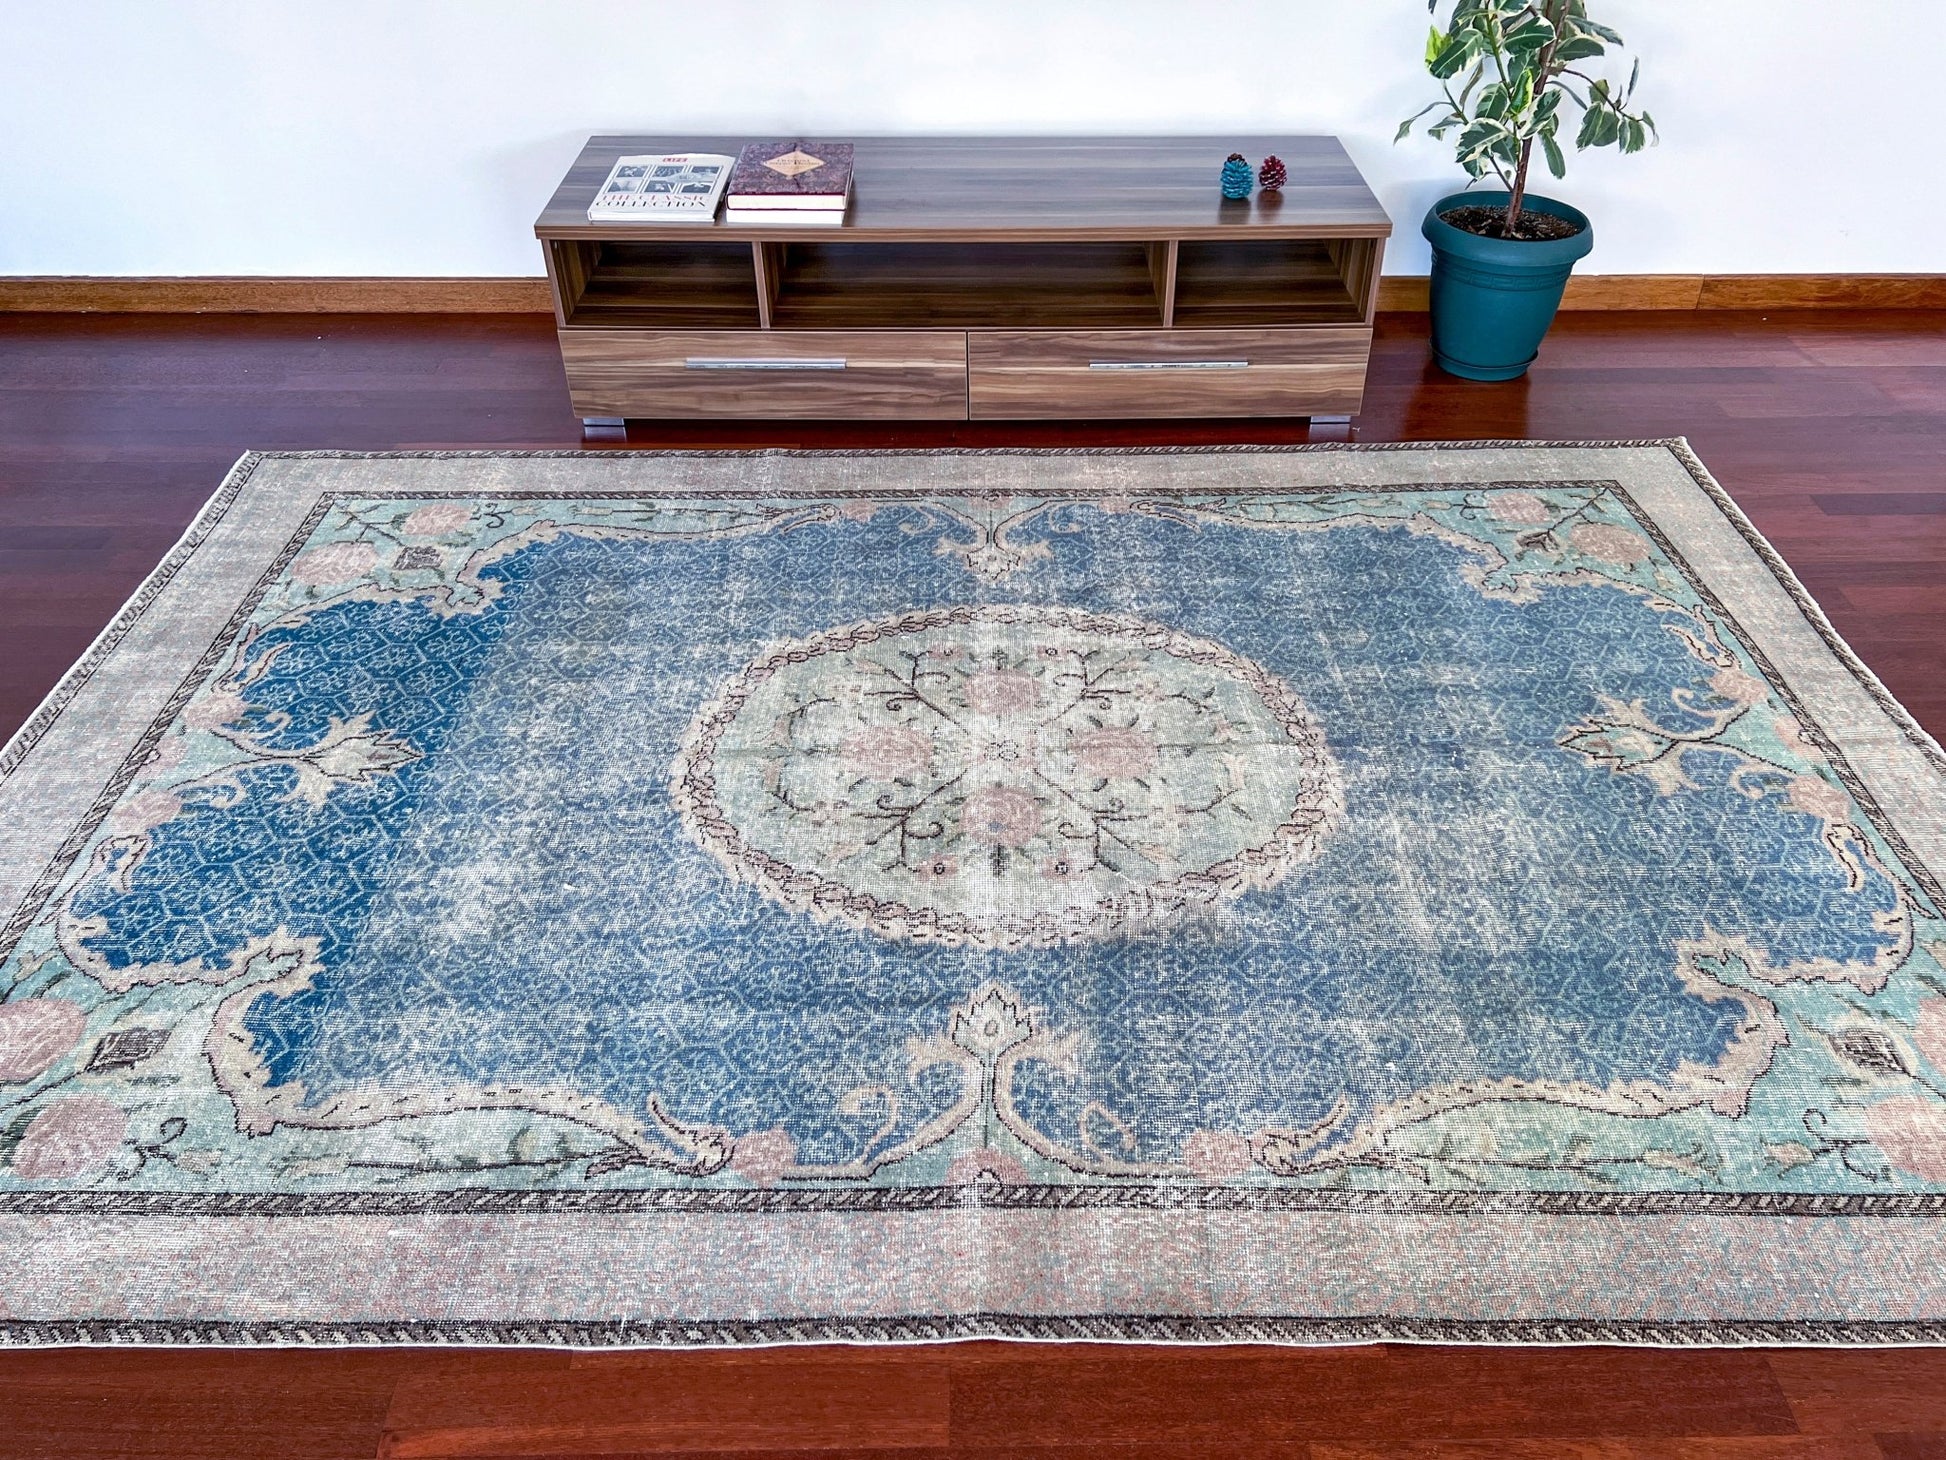 Turkish rug shop san francisco bay area. Vintage washed buy oriental rug online california toronto canada